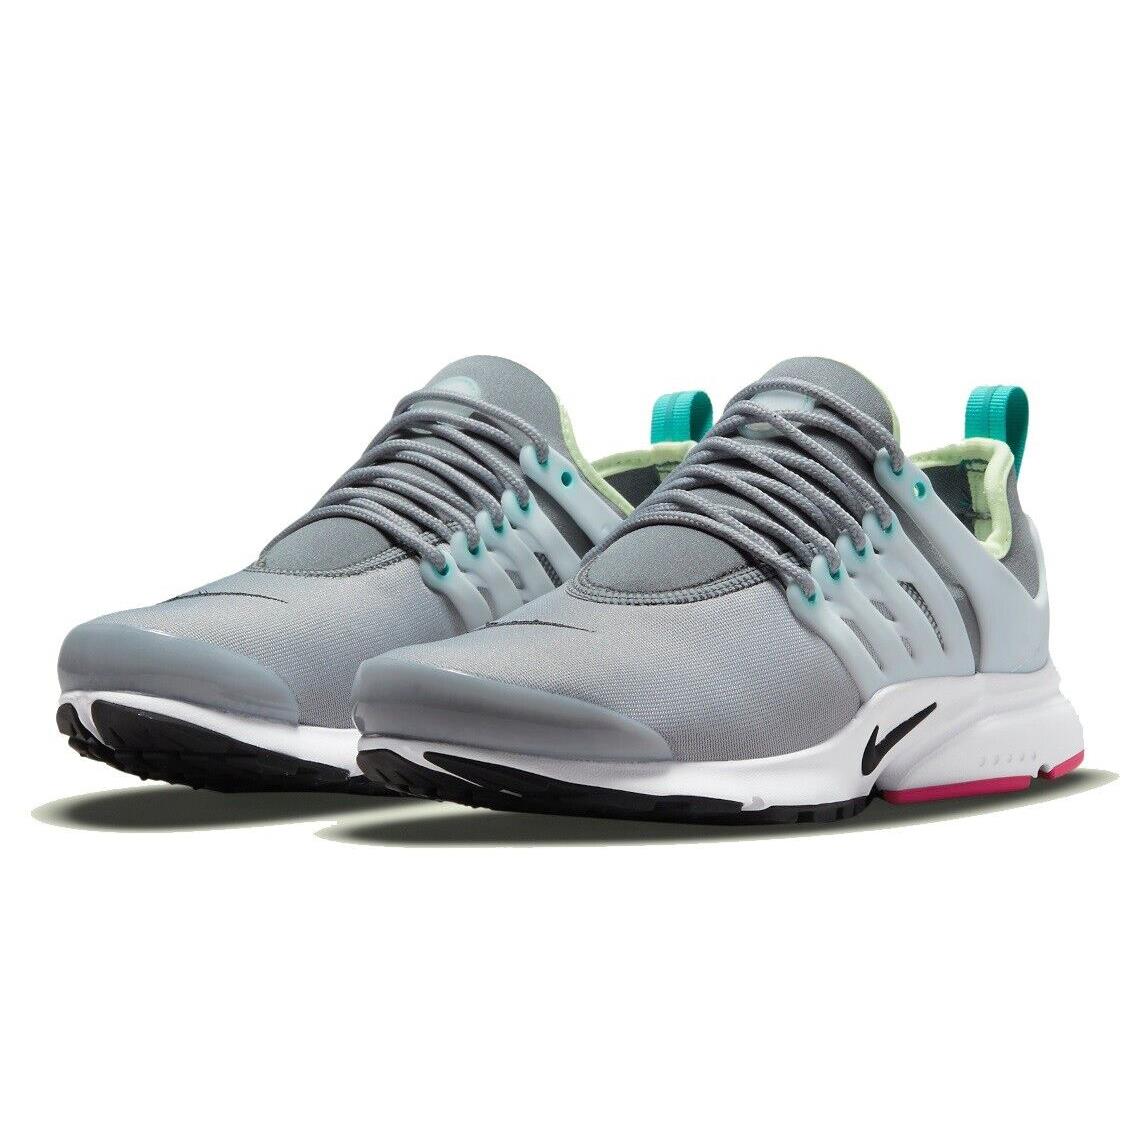 Nike Air Presto Womens Size 7 Sneaker Shoes 878068 018 Cool Grey - Gray